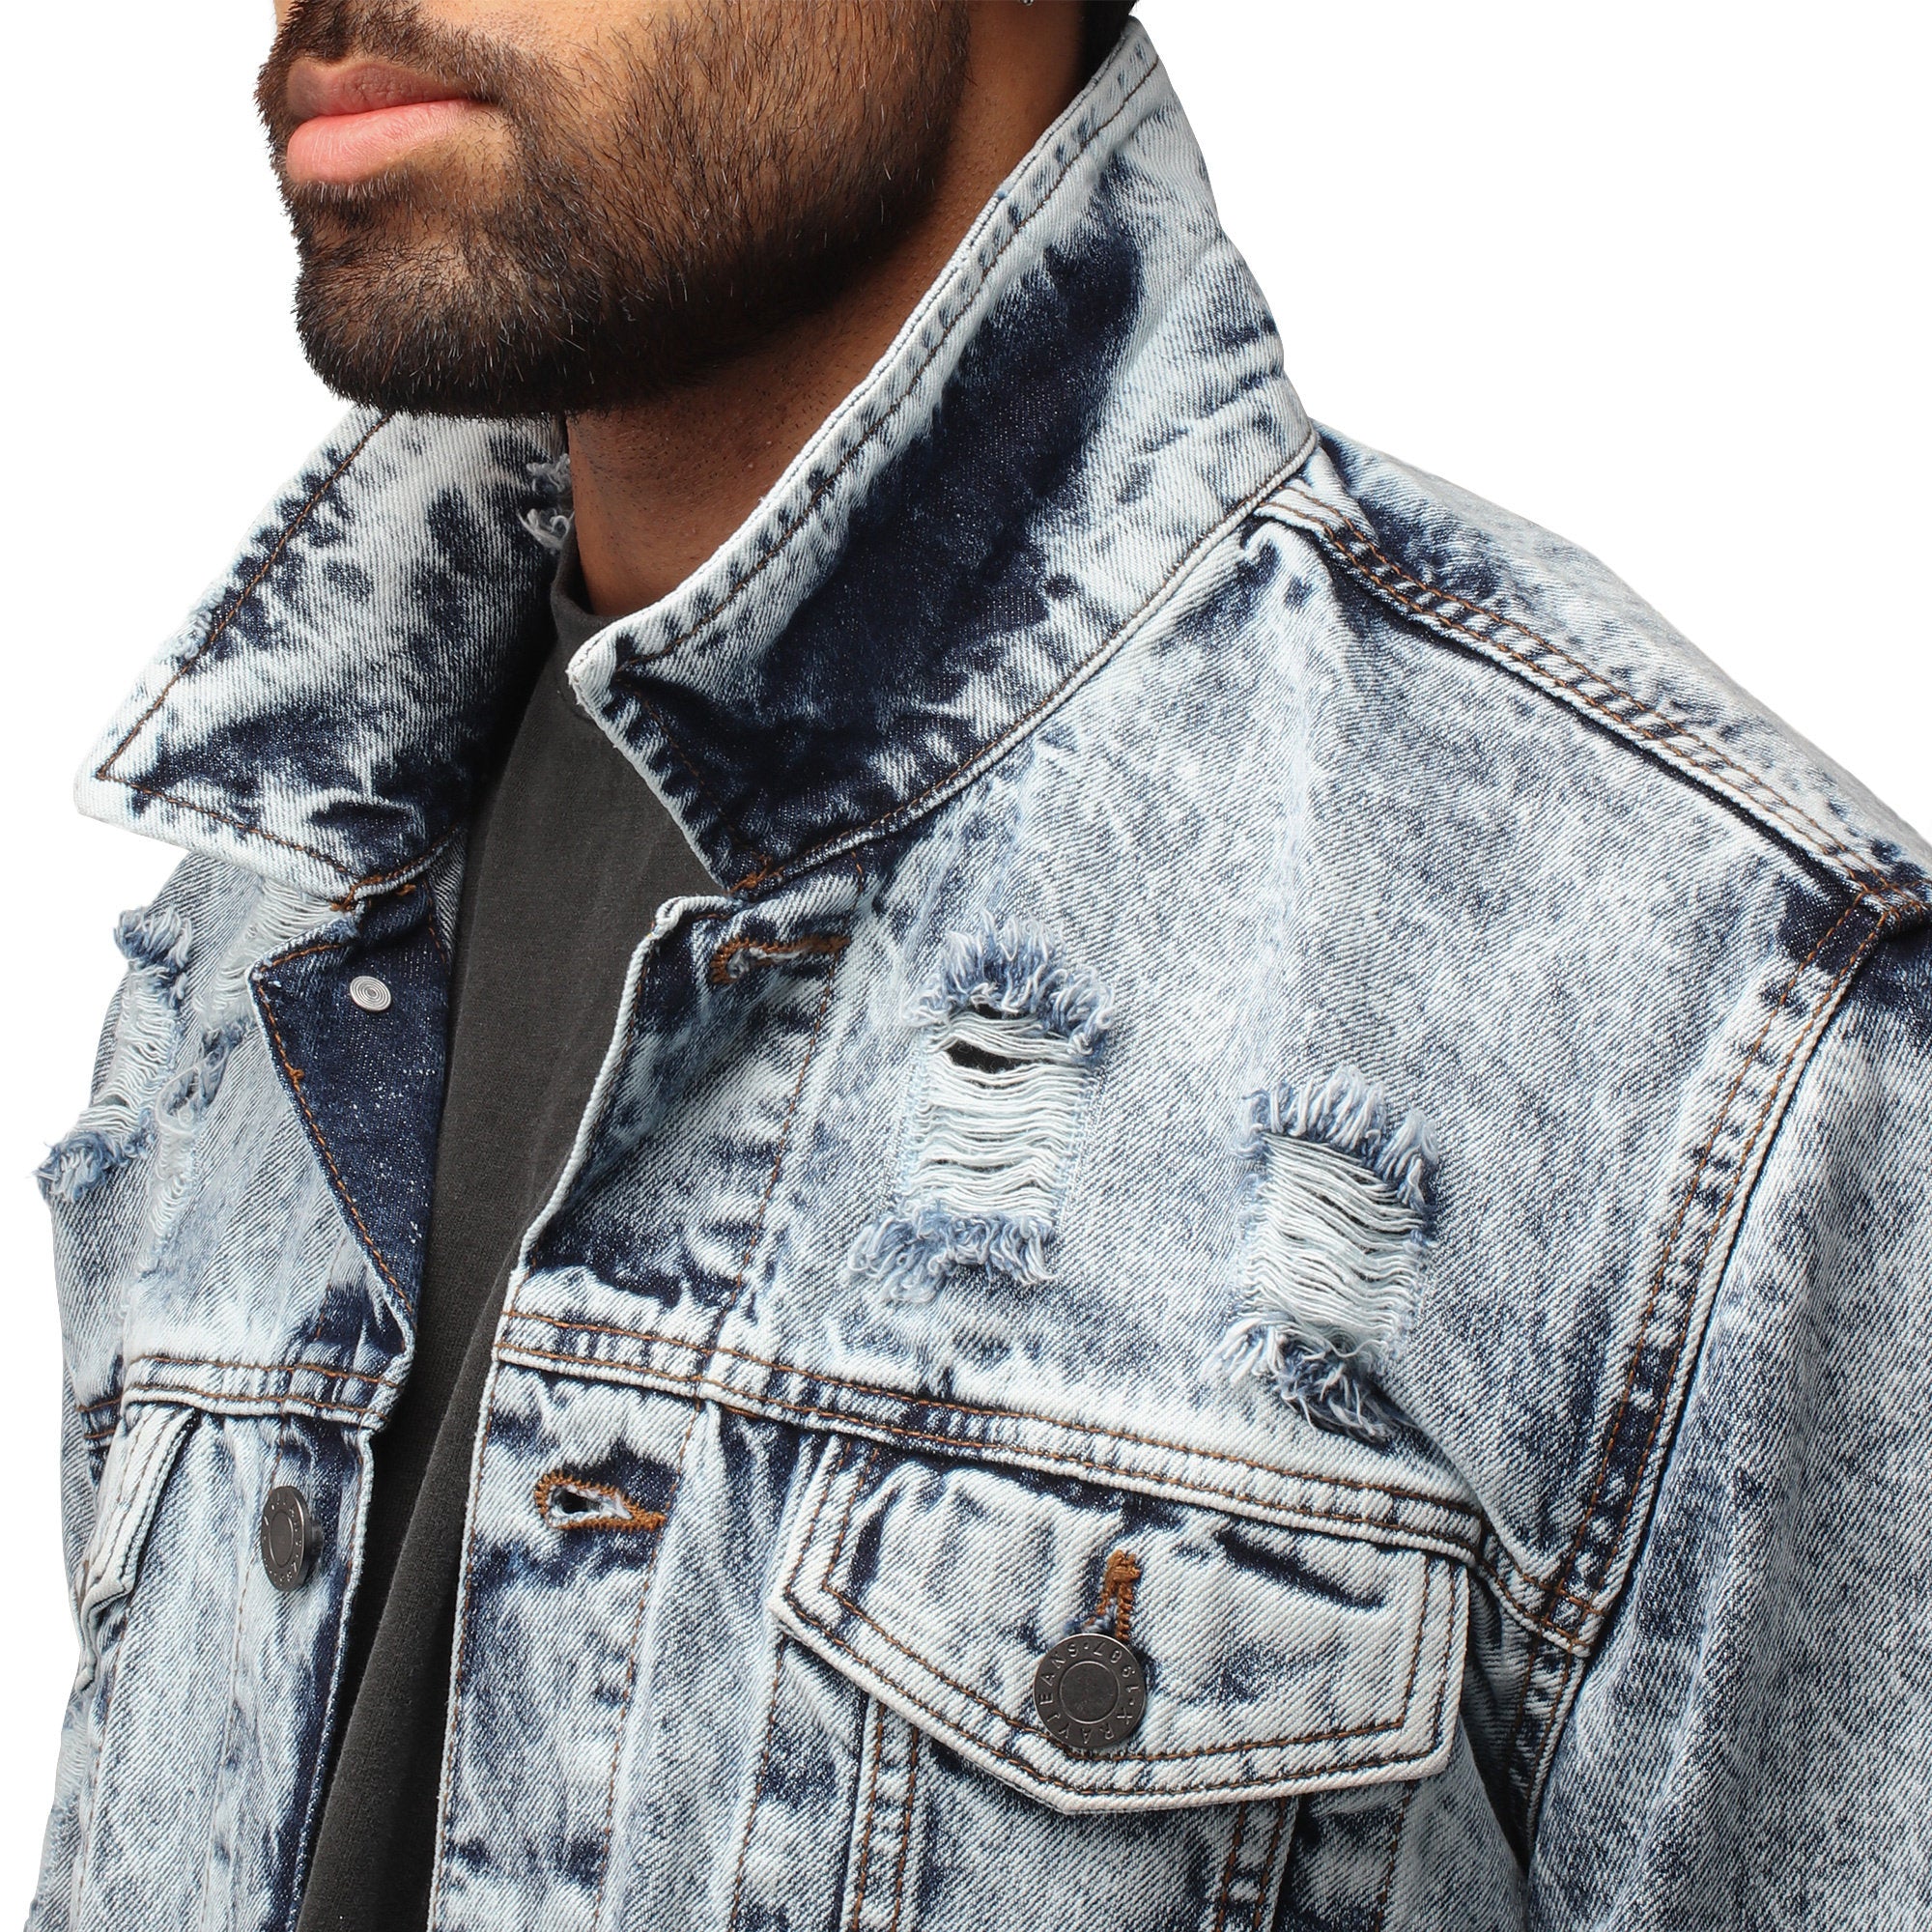 Hosbjerg Leah Acid Wash Denim Jacket | Urban Outfitters Japan - Clothing,  Music, Home & Accessories